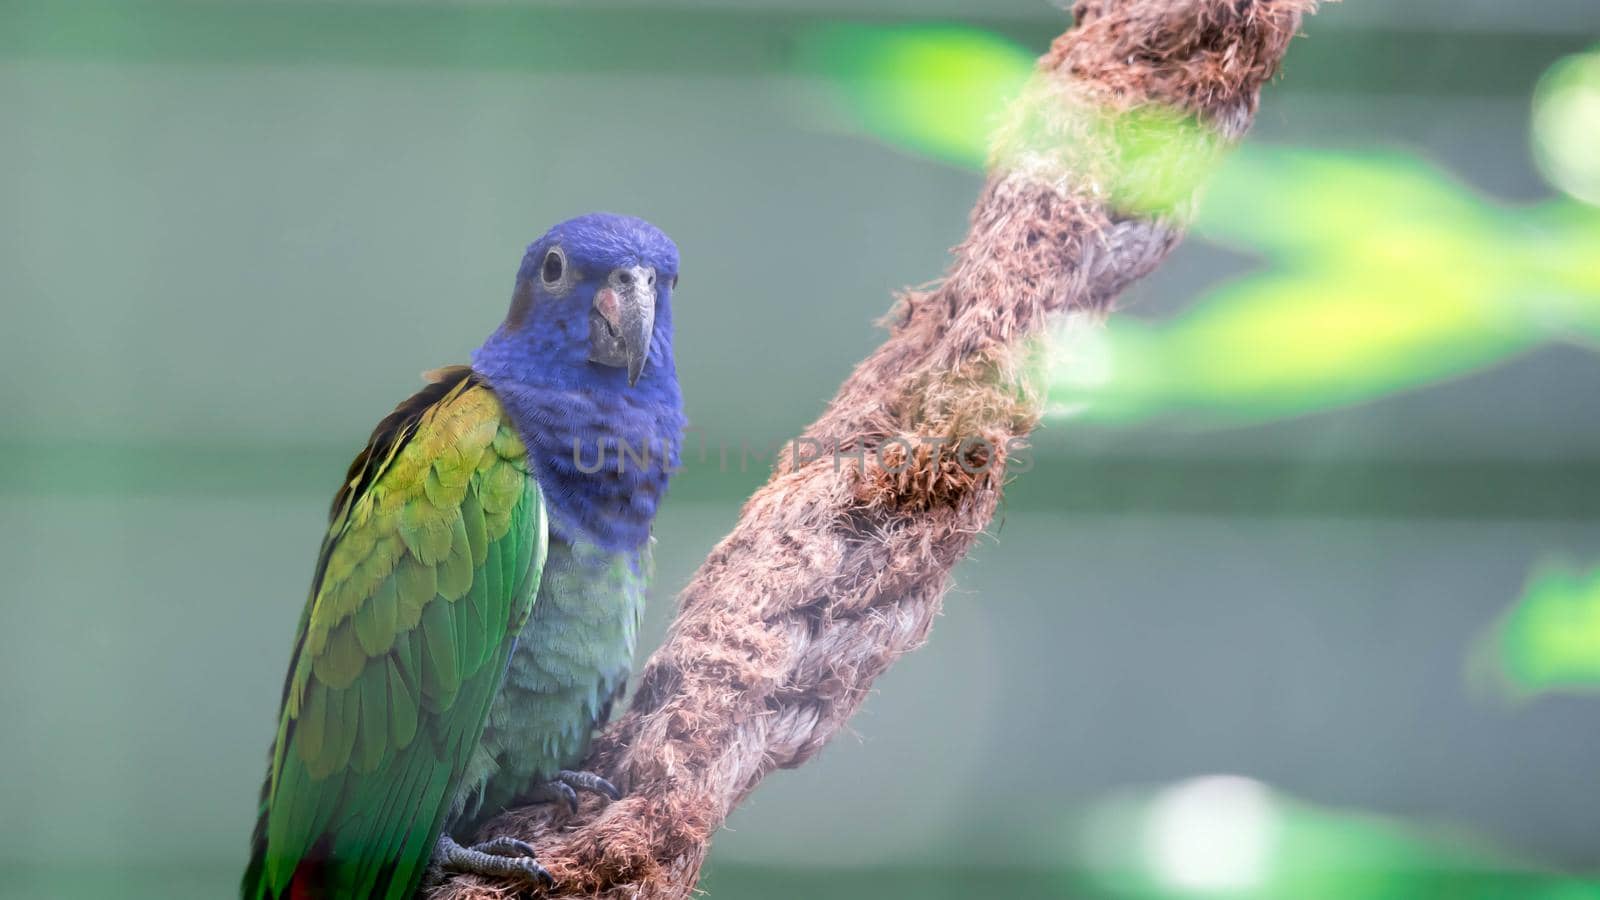 Blue-headed Parrot (Pionus menstruus) by billroque